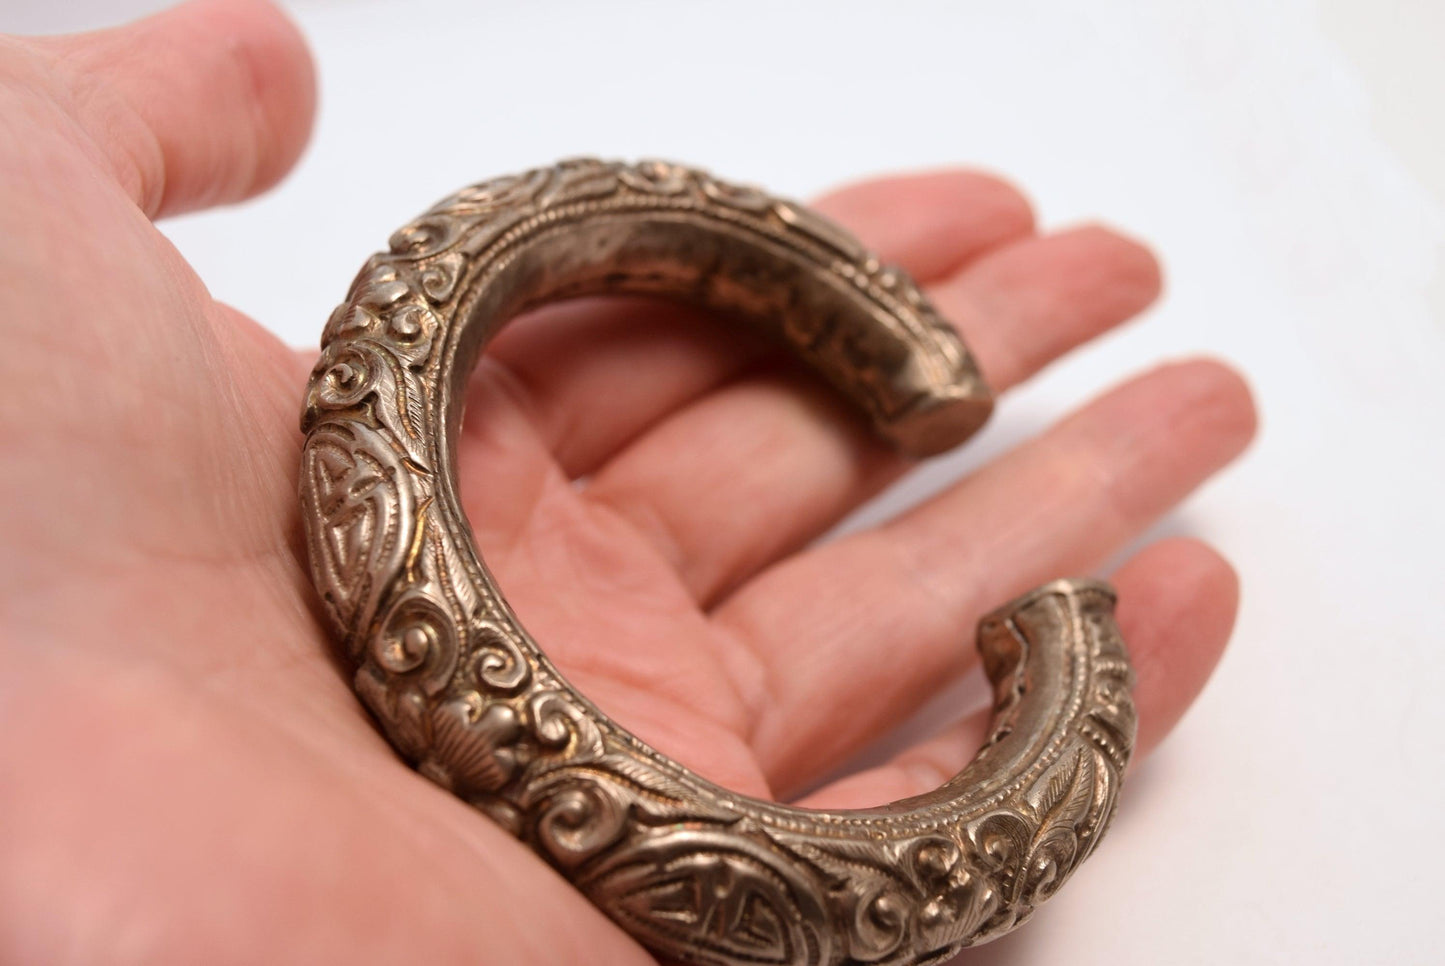 Antique Chinese Repousse Bracelet with Auspicious Symbols - Anteeka